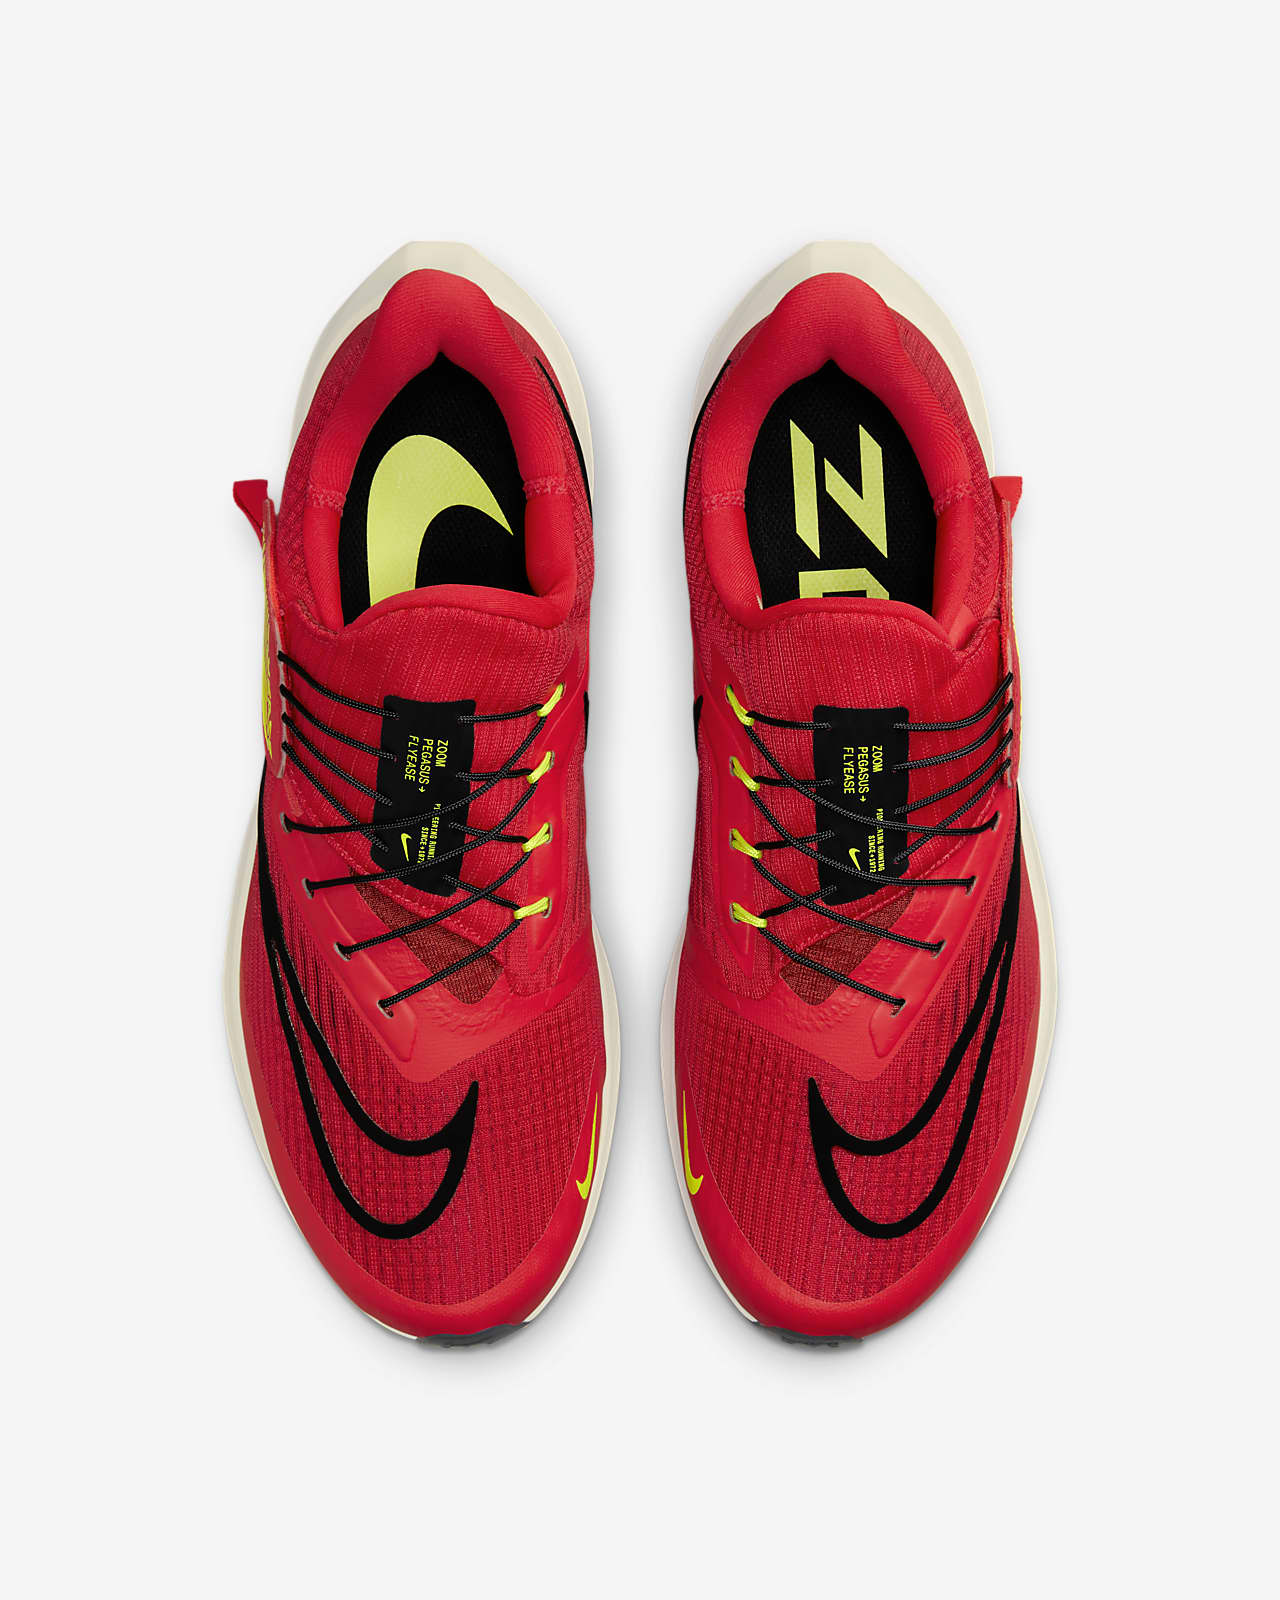 Nike Air Zoom Pegasus FlyEase Men's Easy On/Off Road Running Shoes